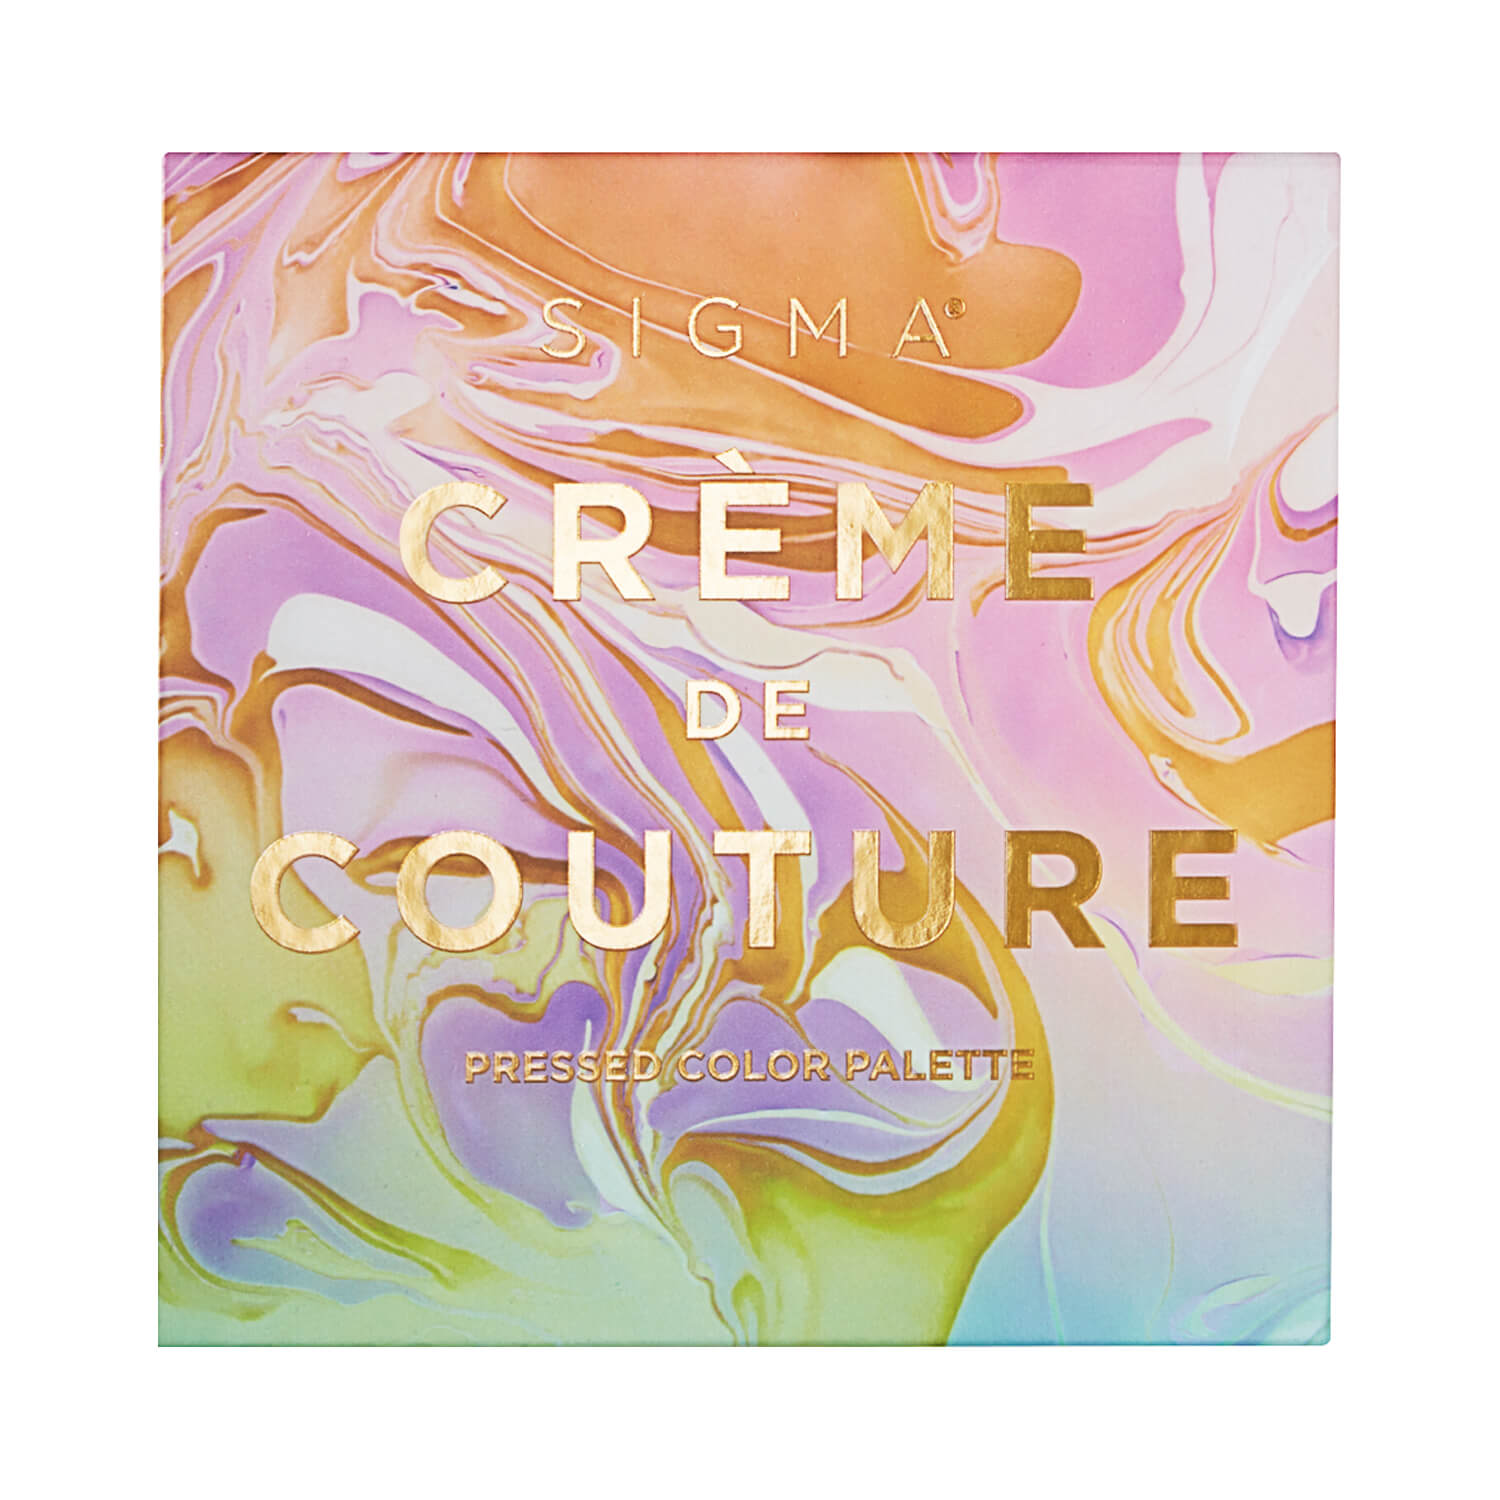 Sigma Beauty Creme De Couture Pressed Color Palette